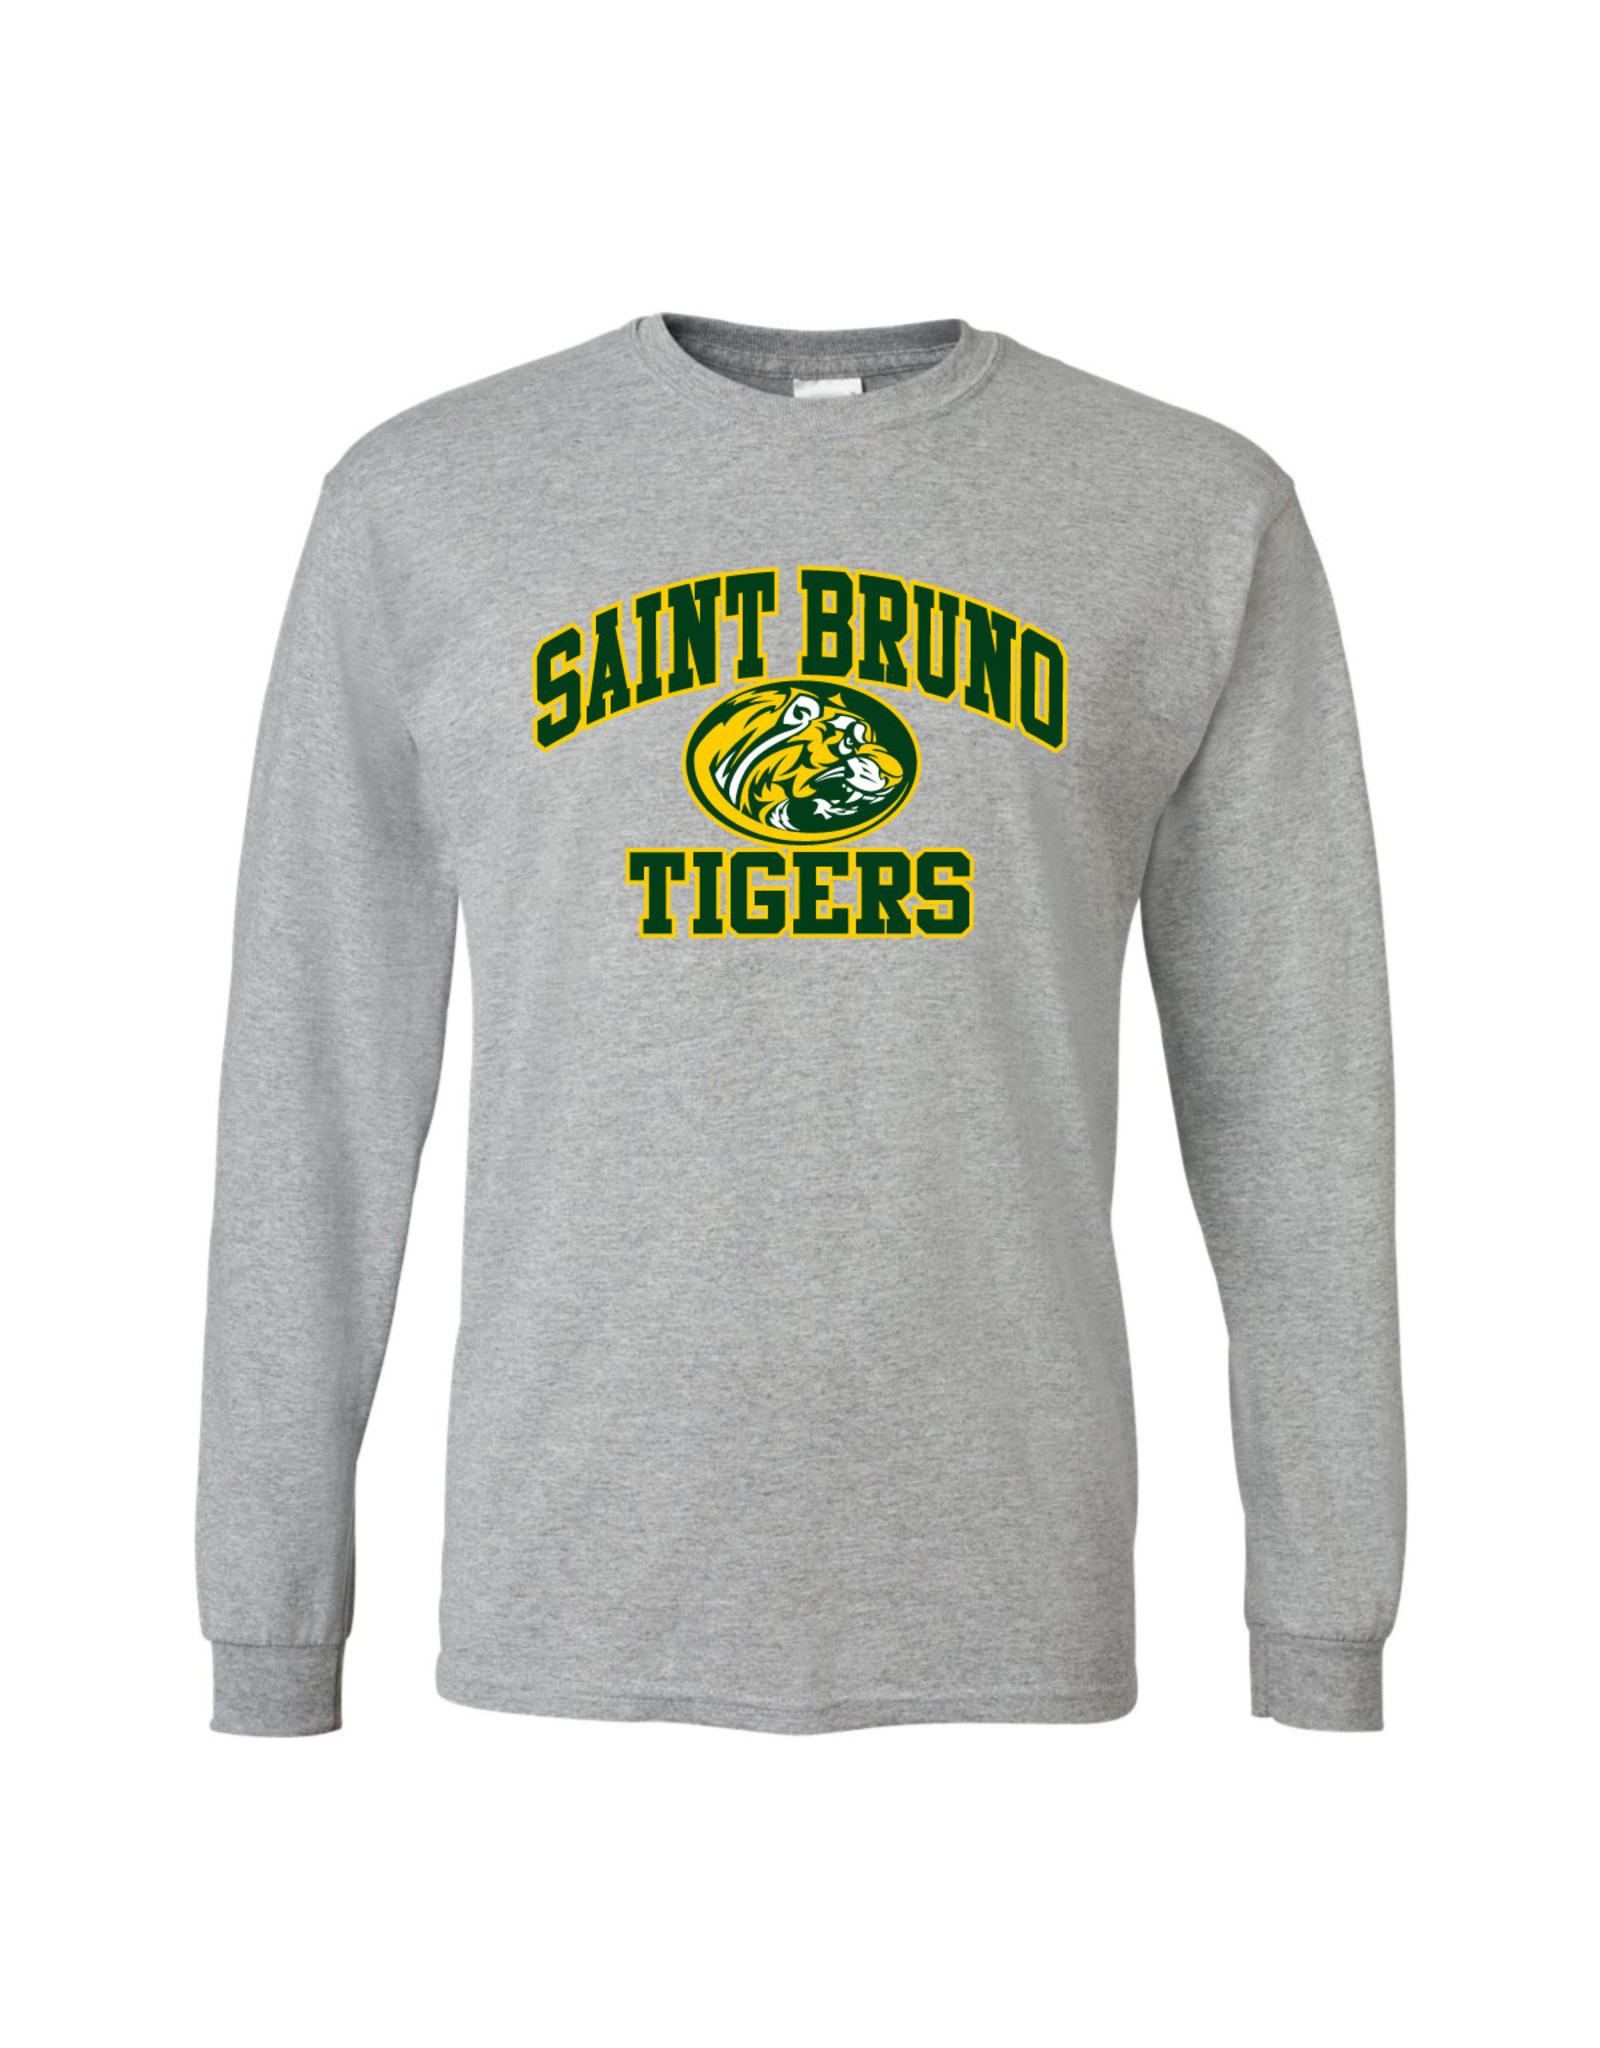 St. Bruno (Y) Long Sleeve PE T-Shirt